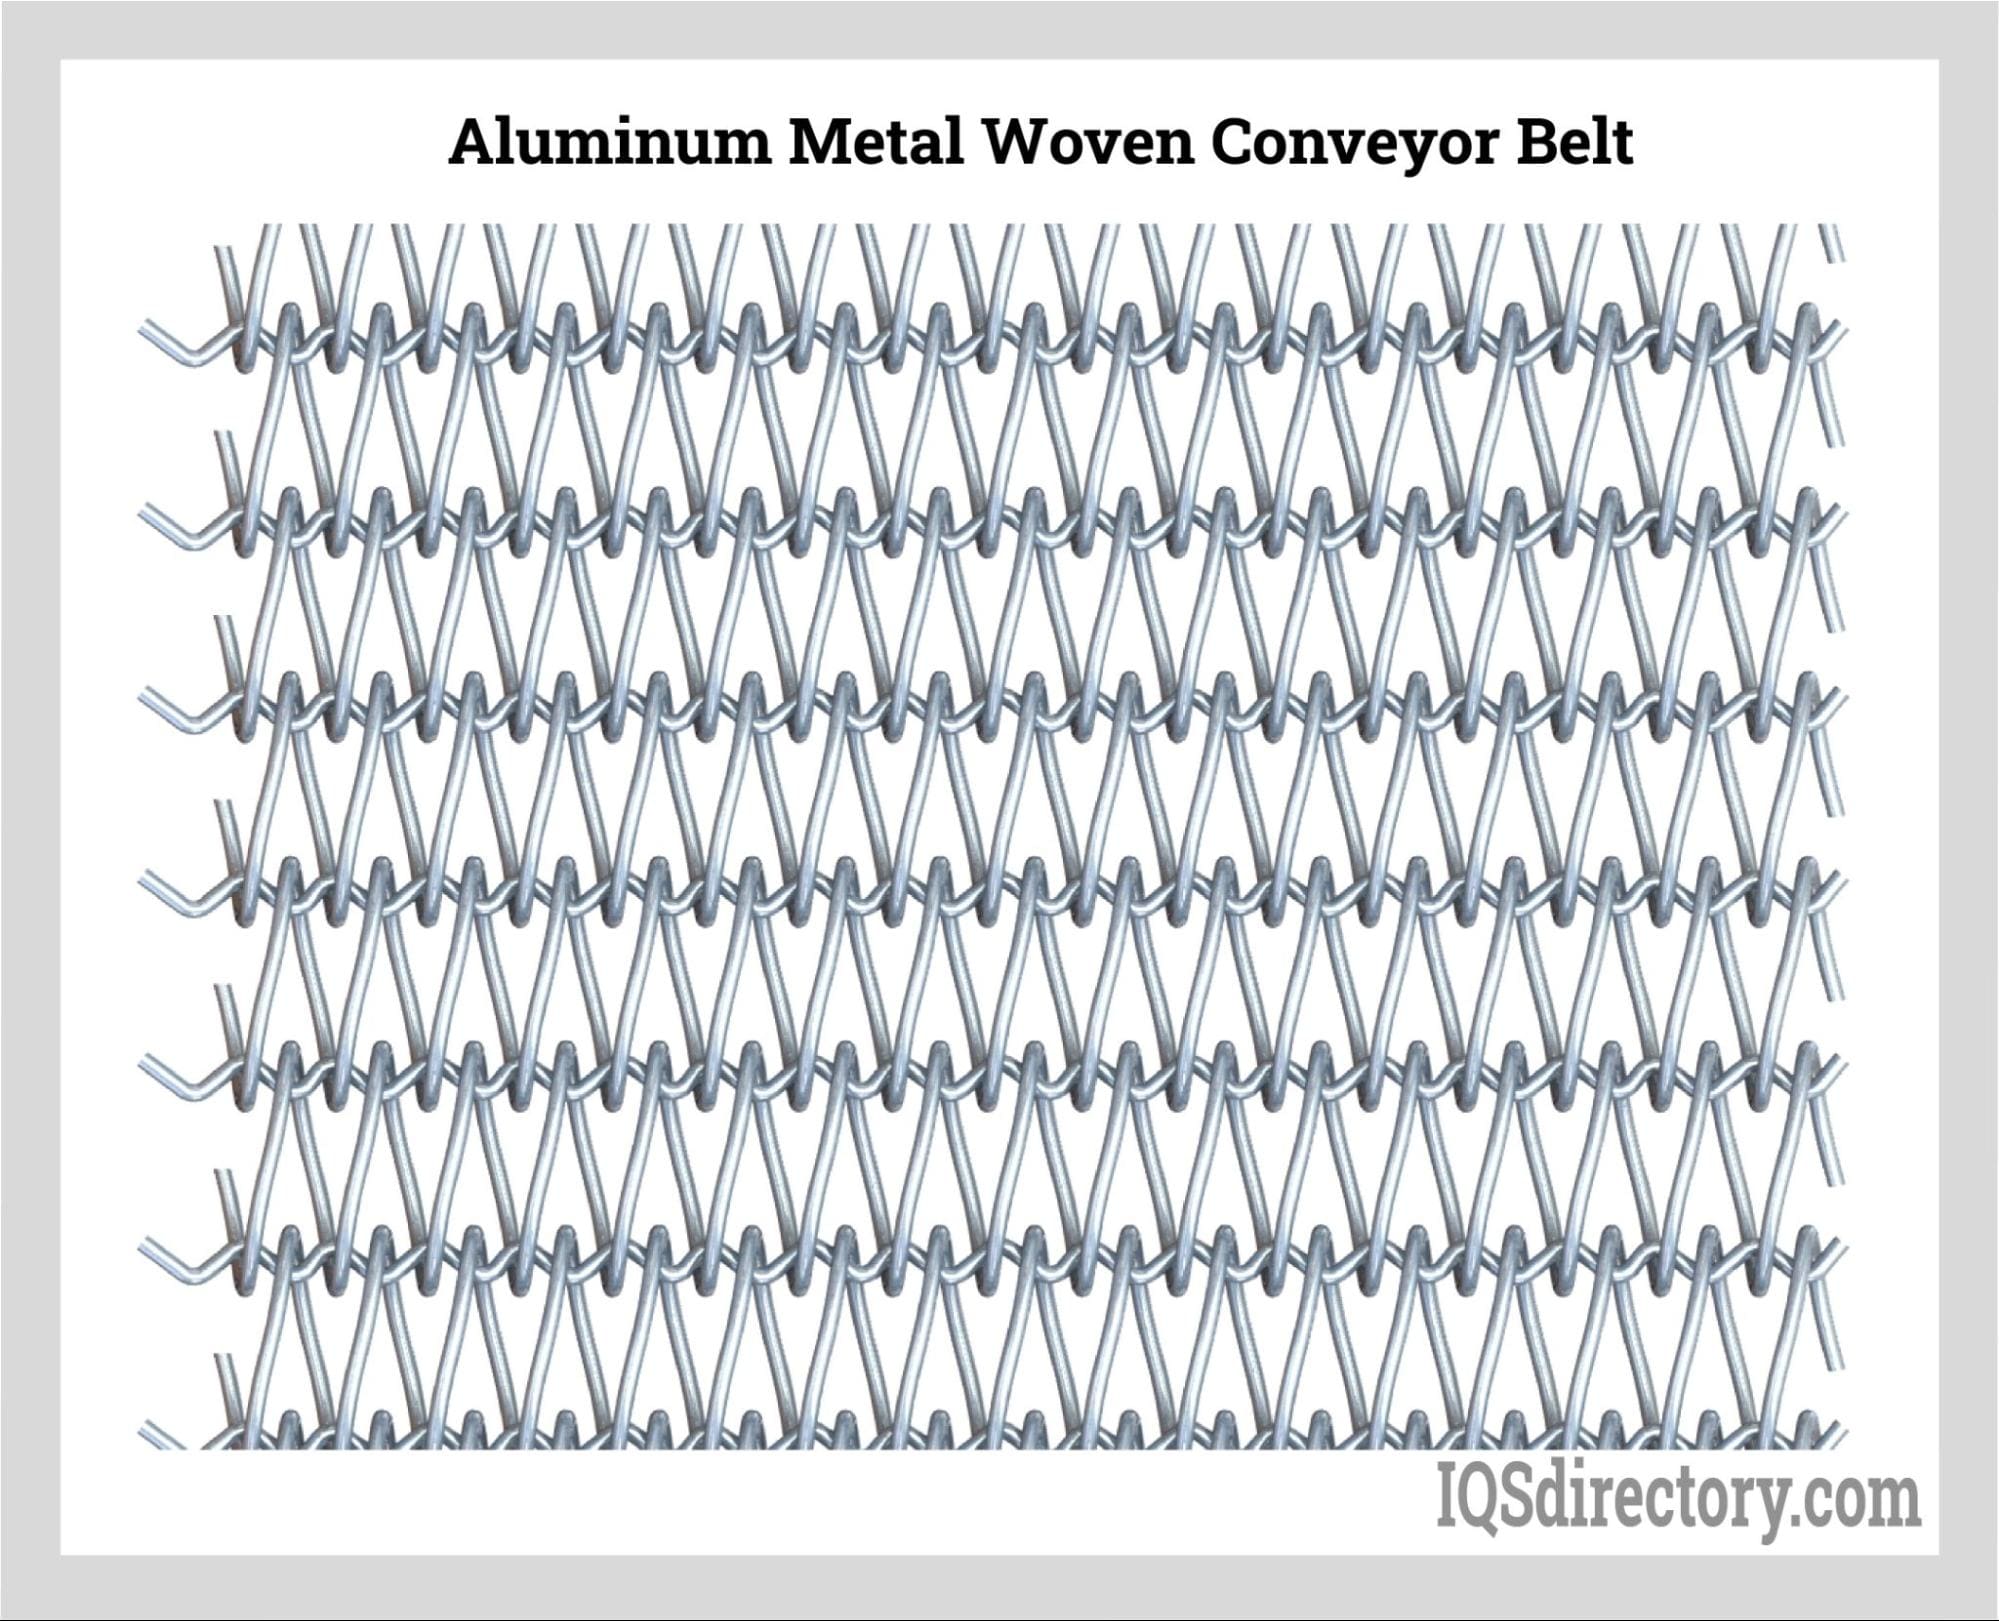 Aluminum Metal Woven Conveyor Belt